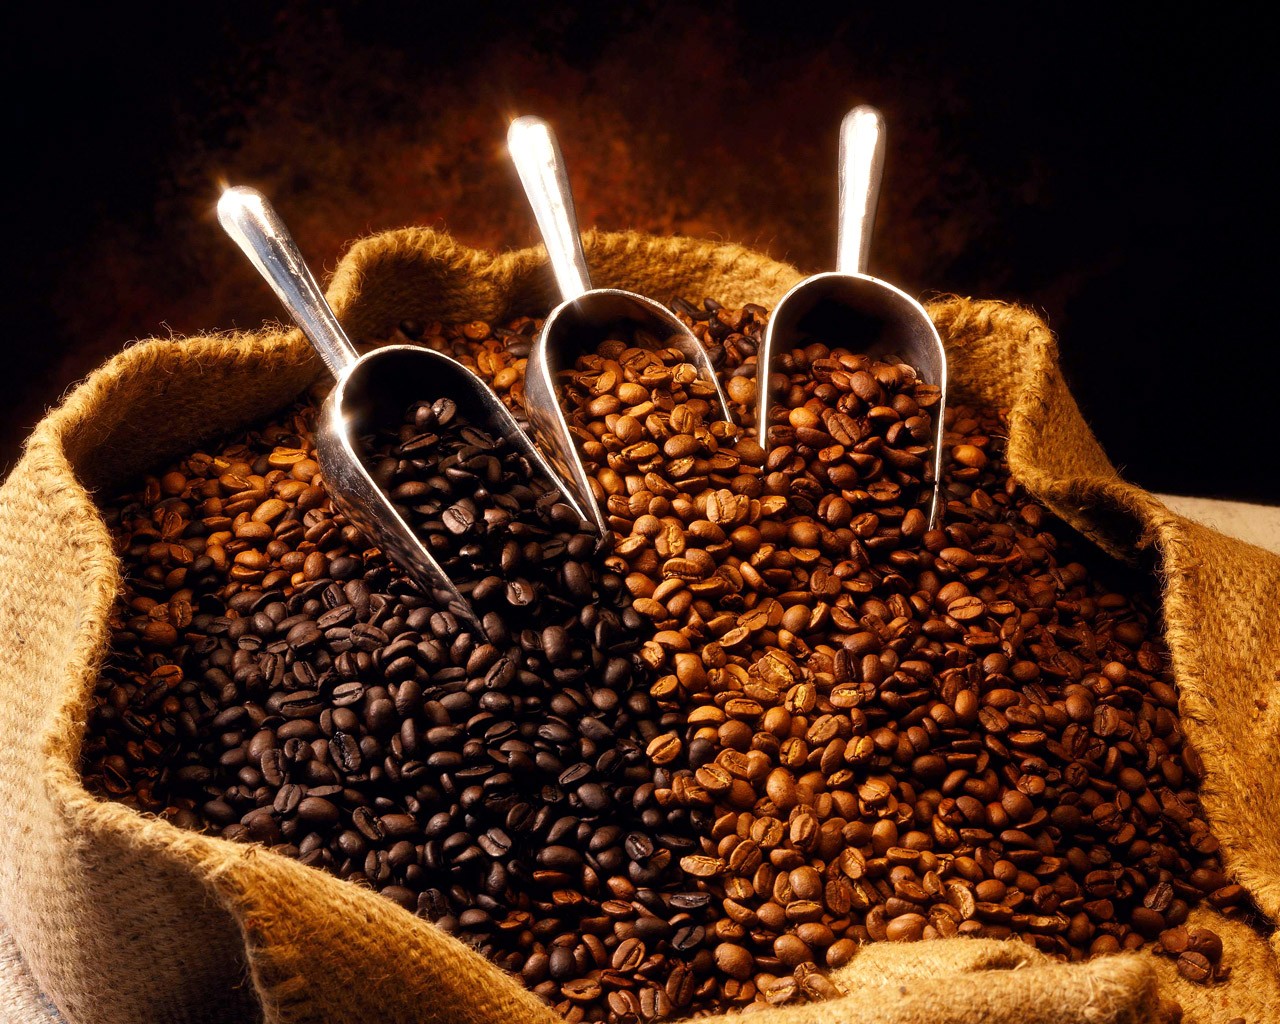 General 1280x1024 coffee beans food coffee